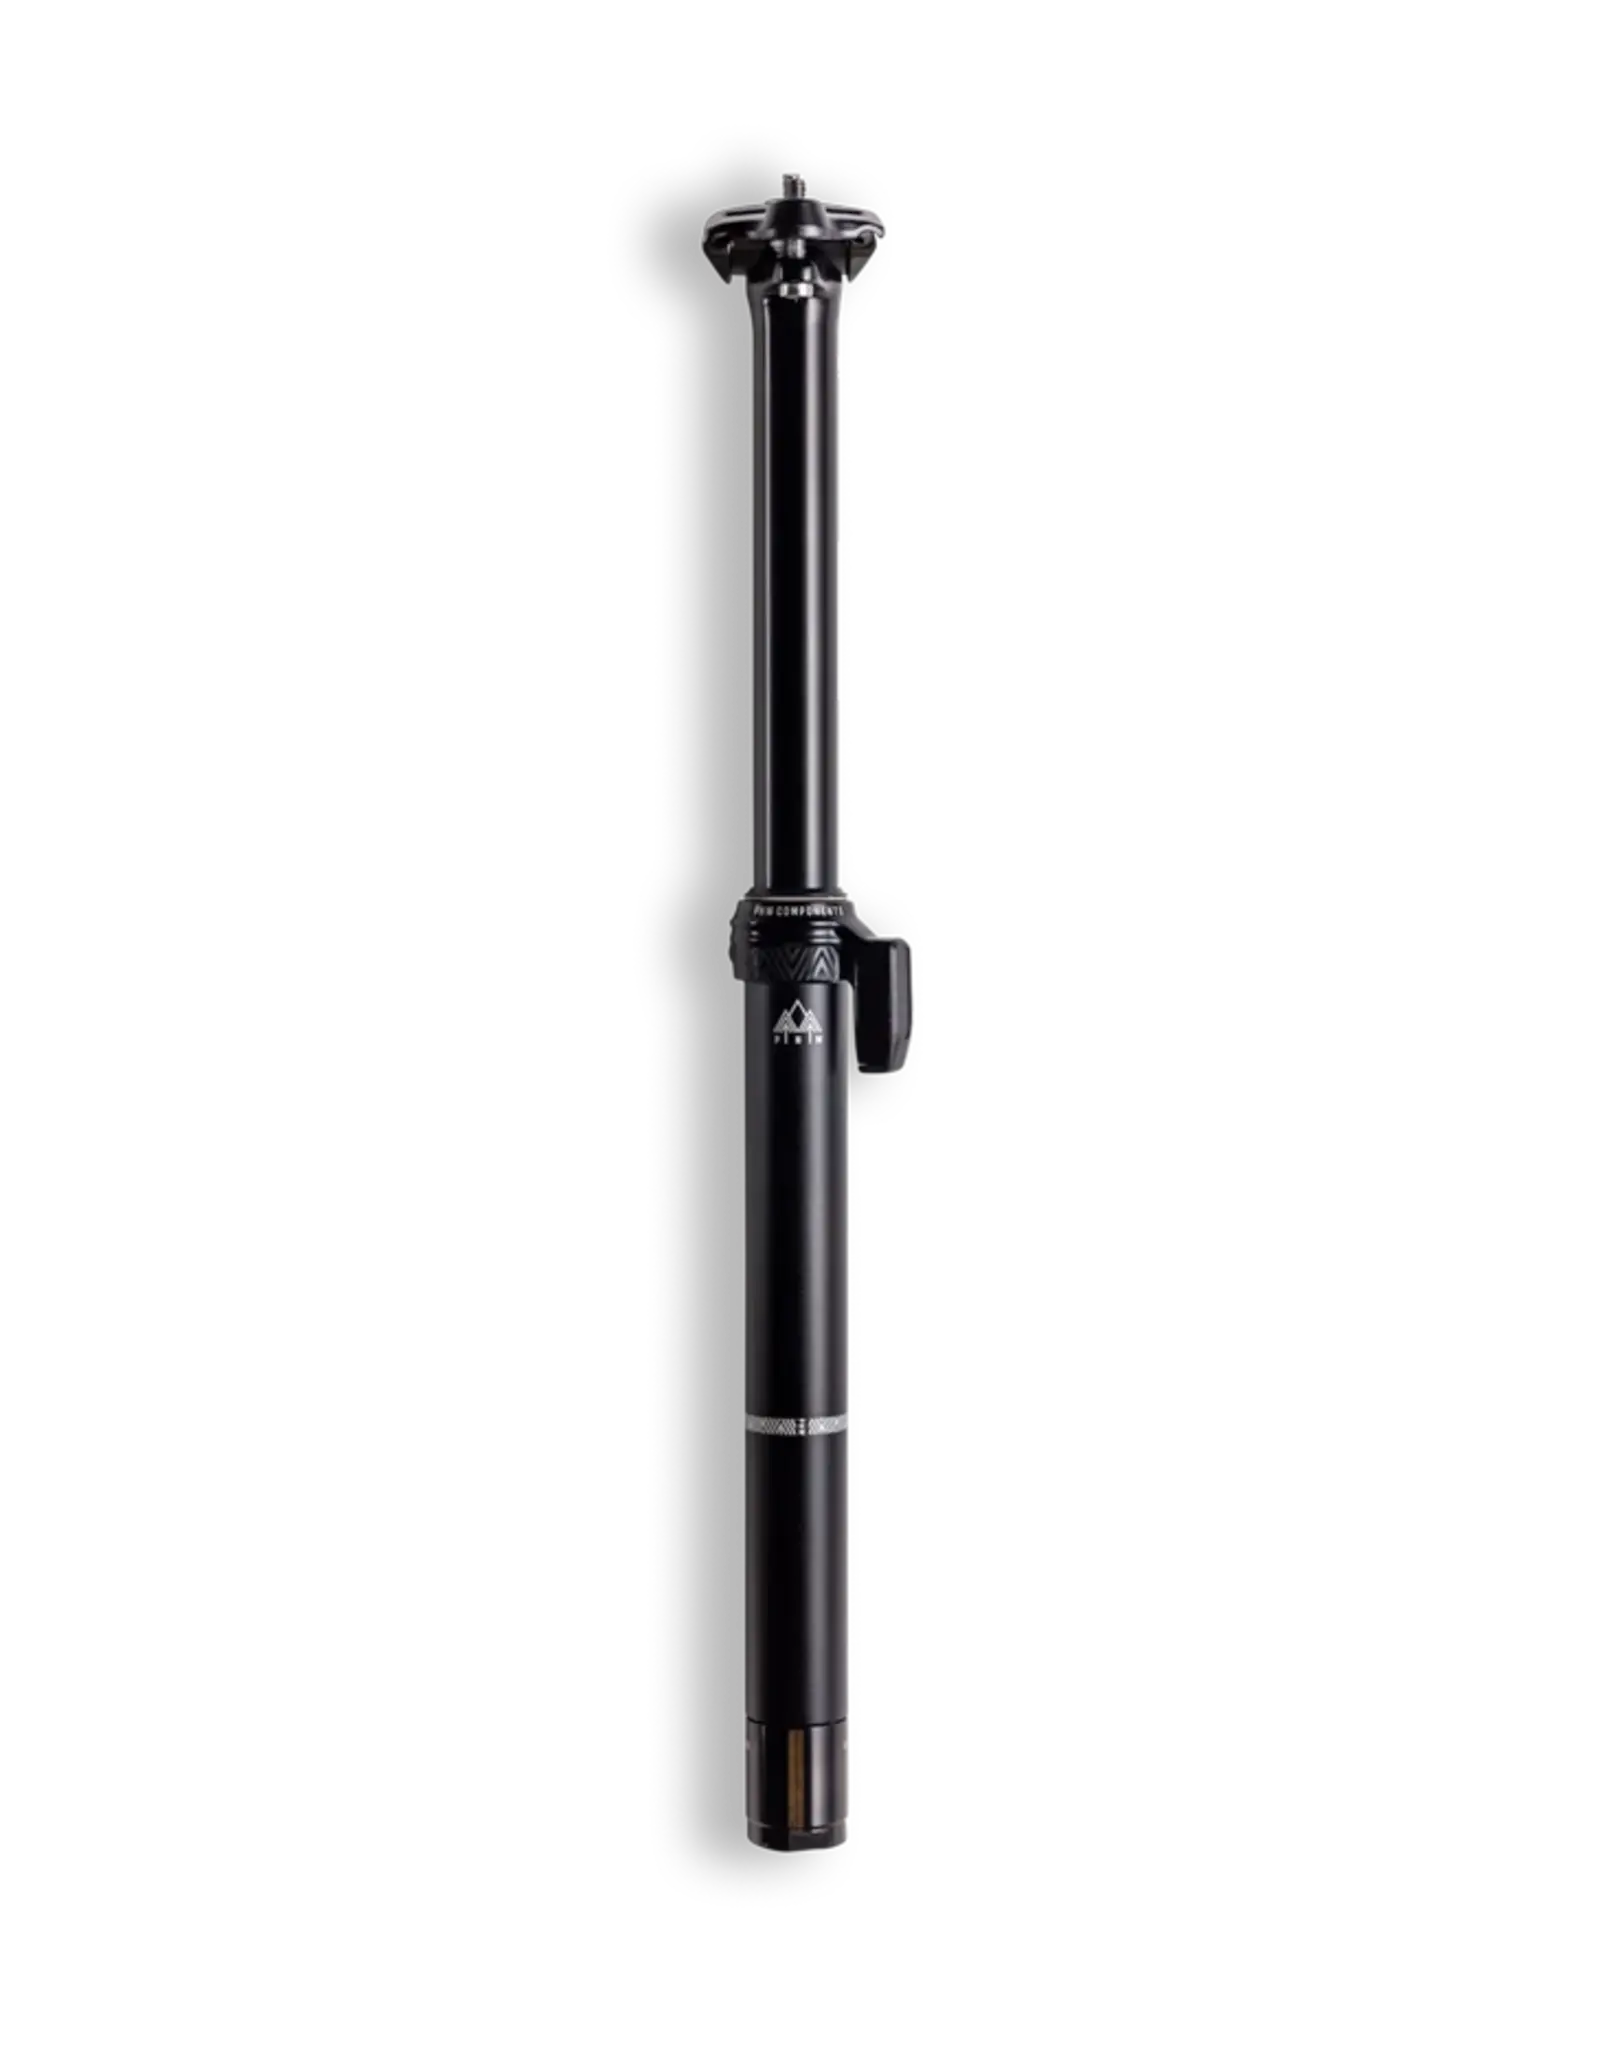 PNW Cascade Dropper - 125mm x 30.9